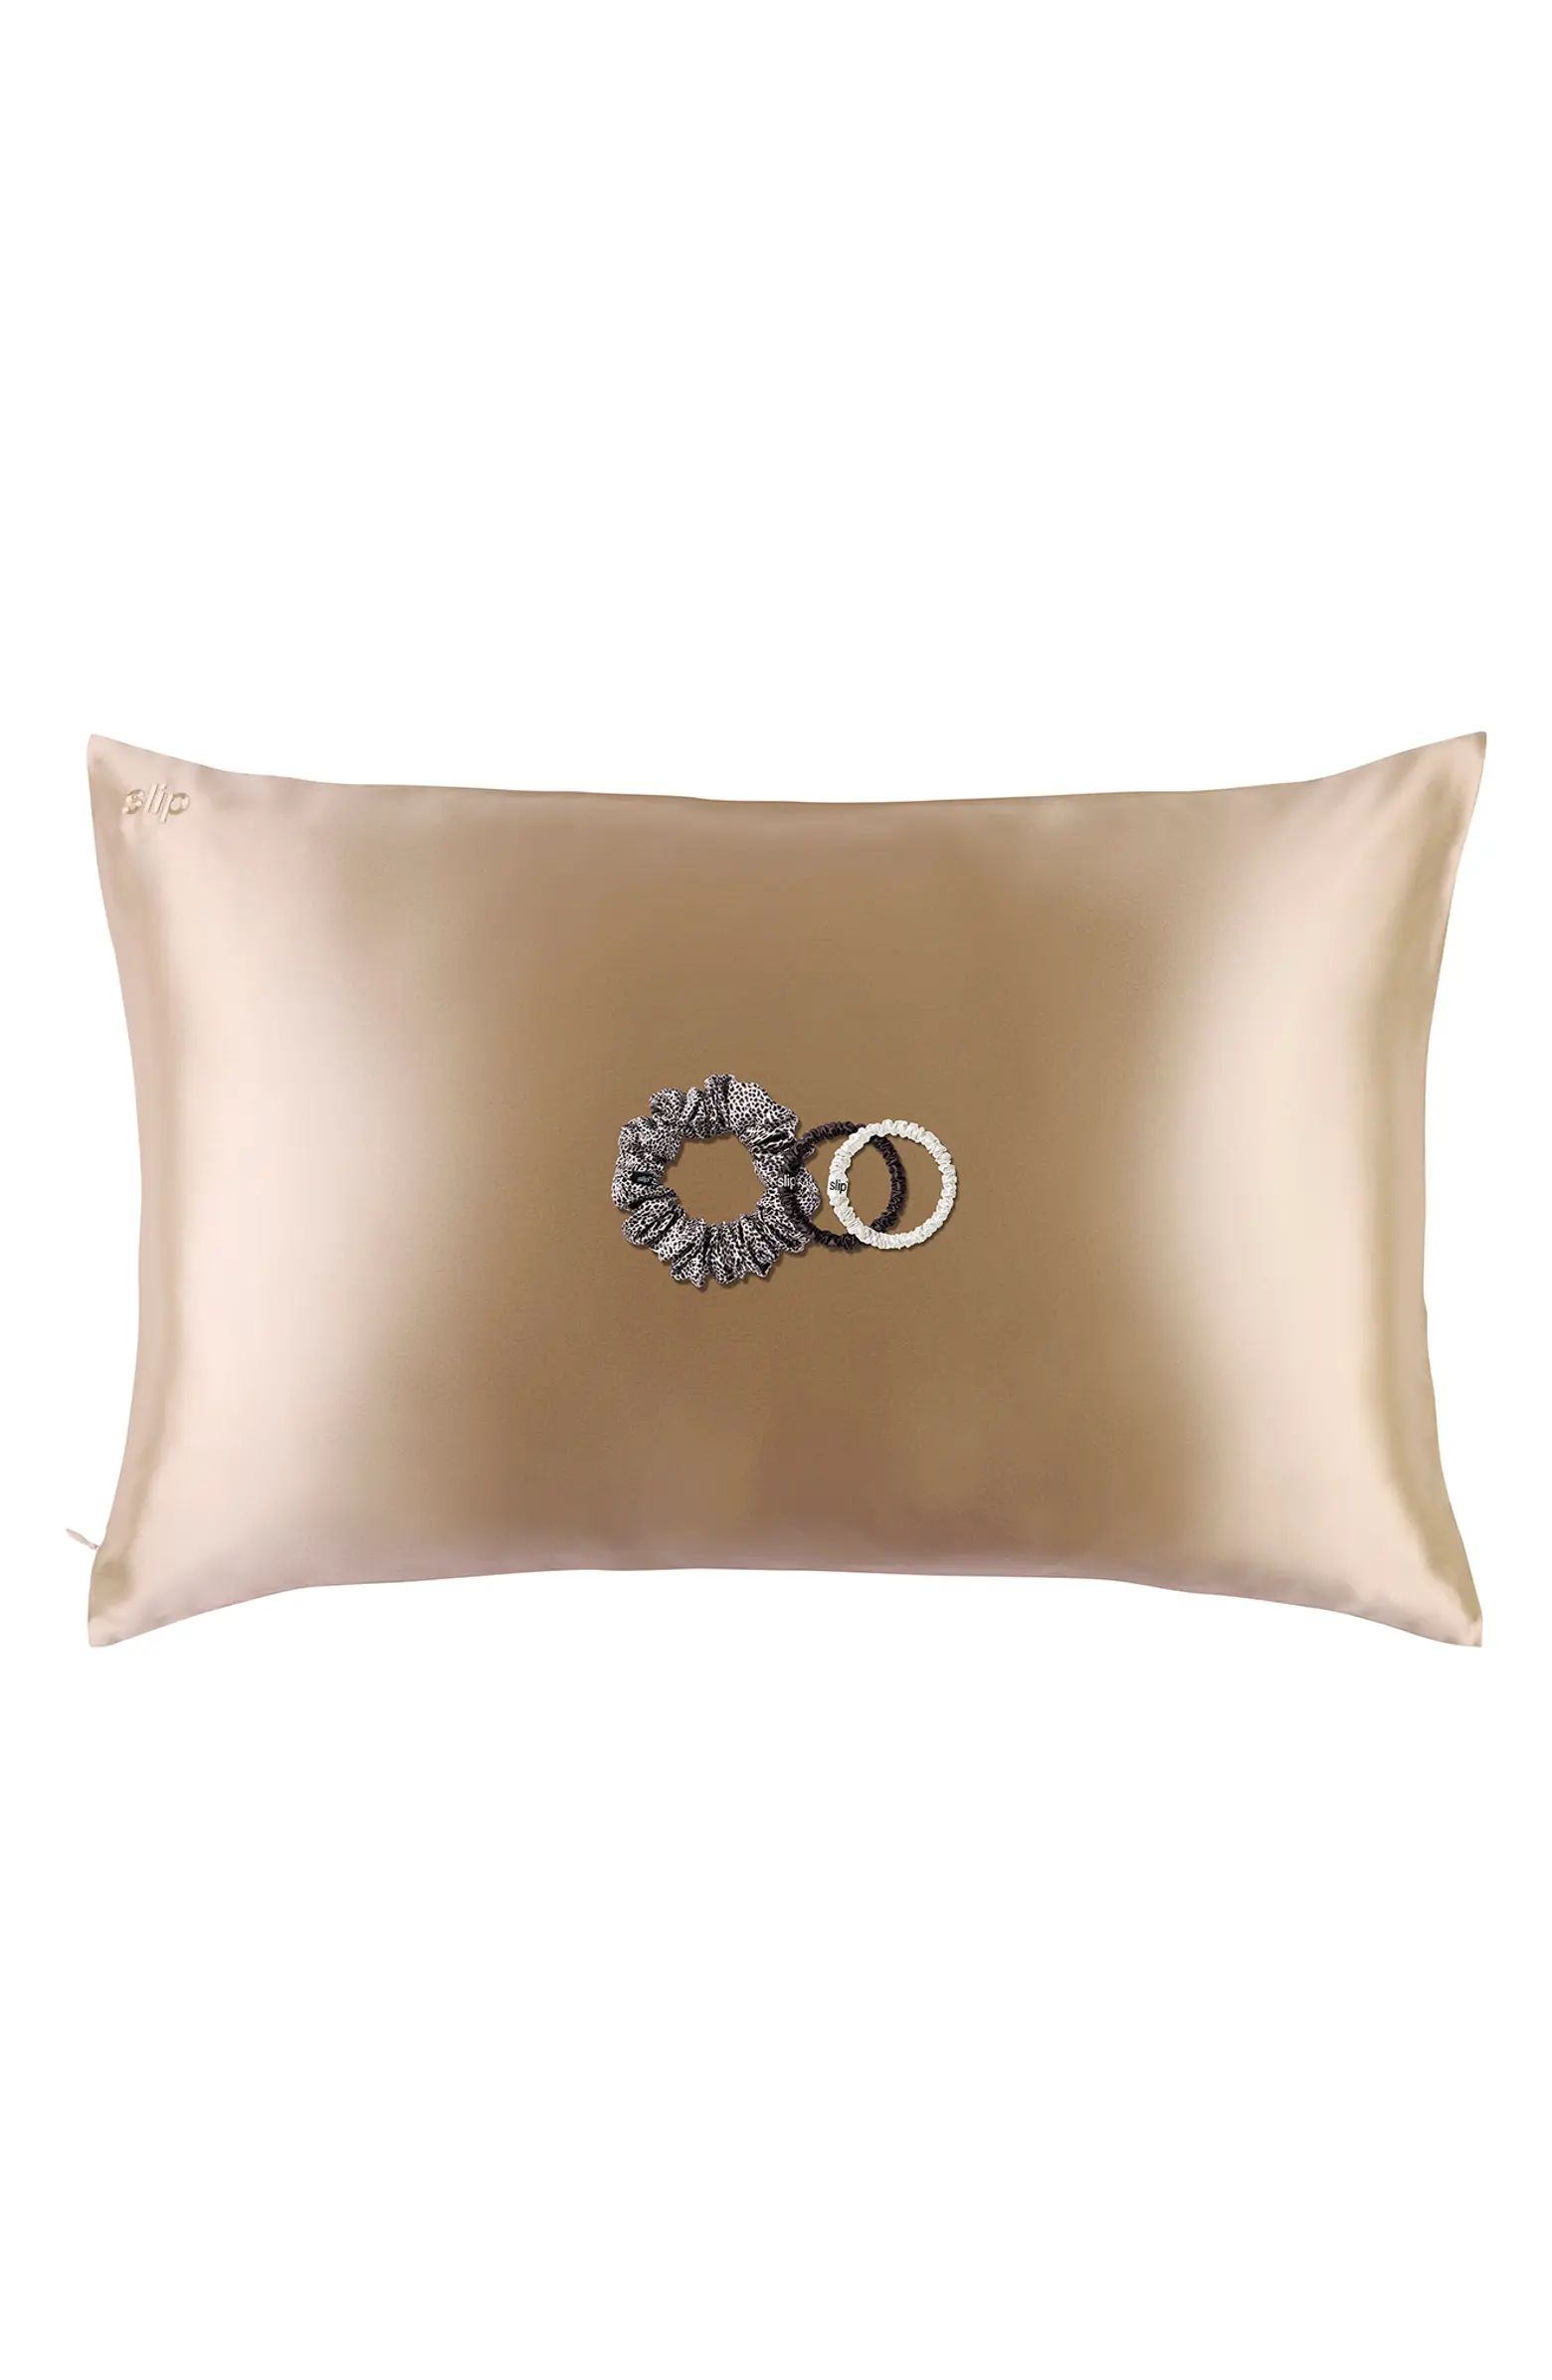 slip Pillowcase & Hair Tie Set (Nordstrom Exclusive) USD $115 Value | Nordstrom | Nordstrom